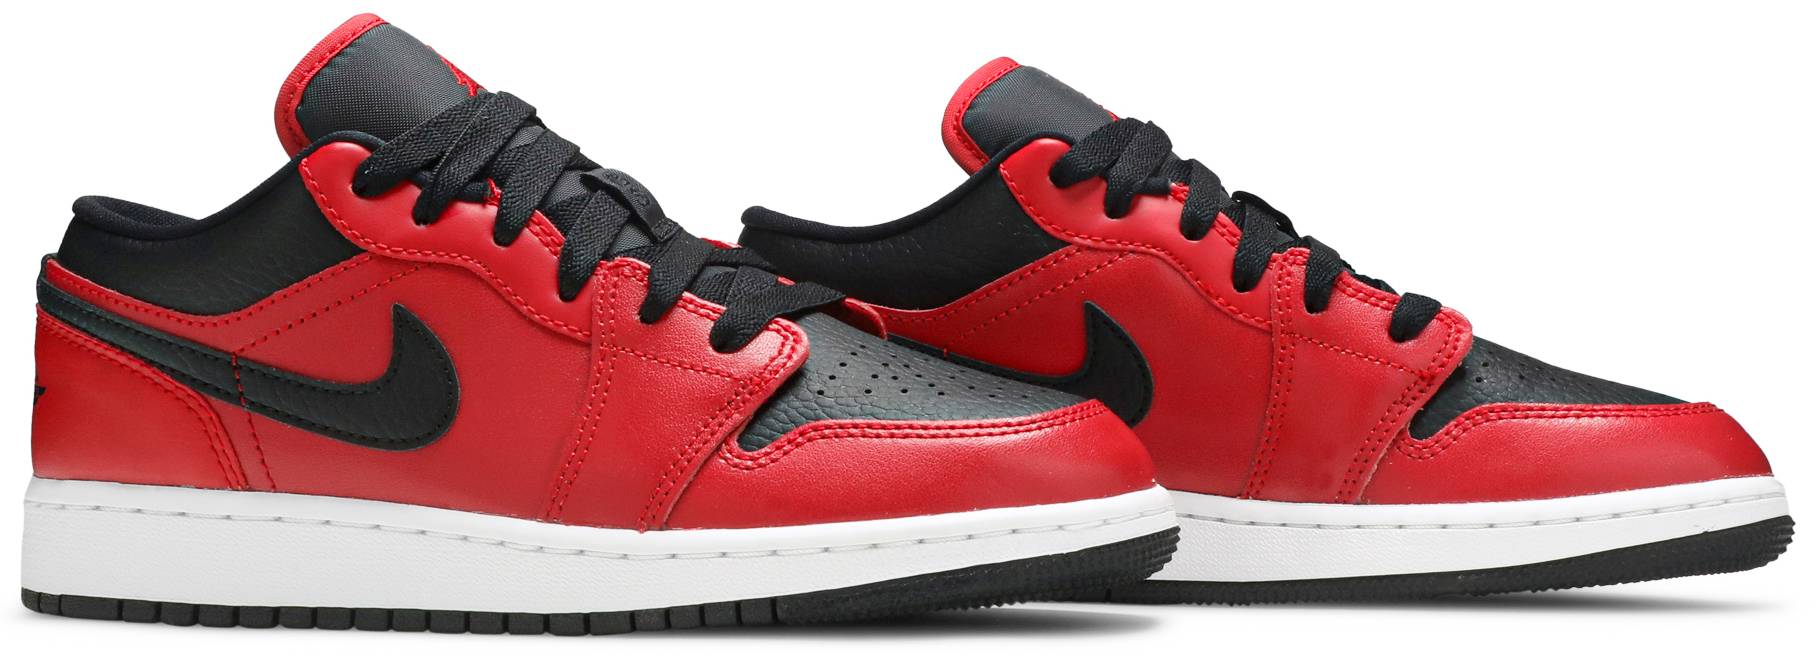 Nike Air Jordan 1 Low Gym Red Black Pebbled (GS) Women's